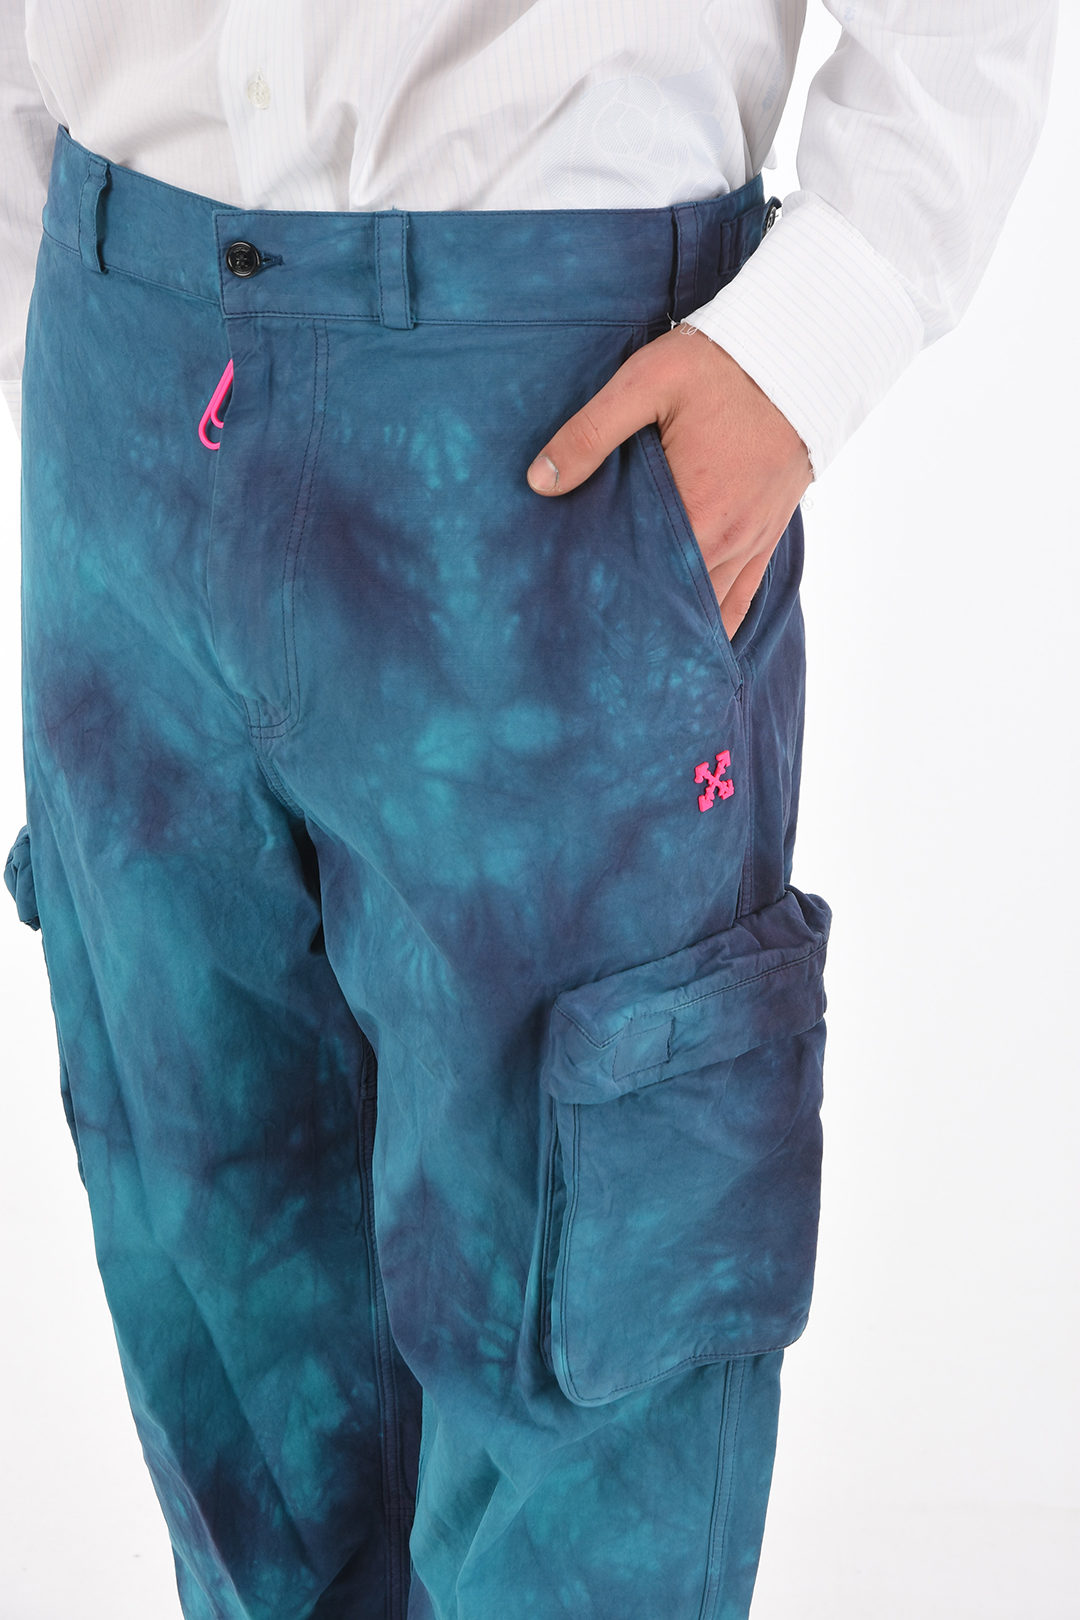 Off-White Tie Dye Motif RIPSTOP Cargo Pants men - Glamood Outlet